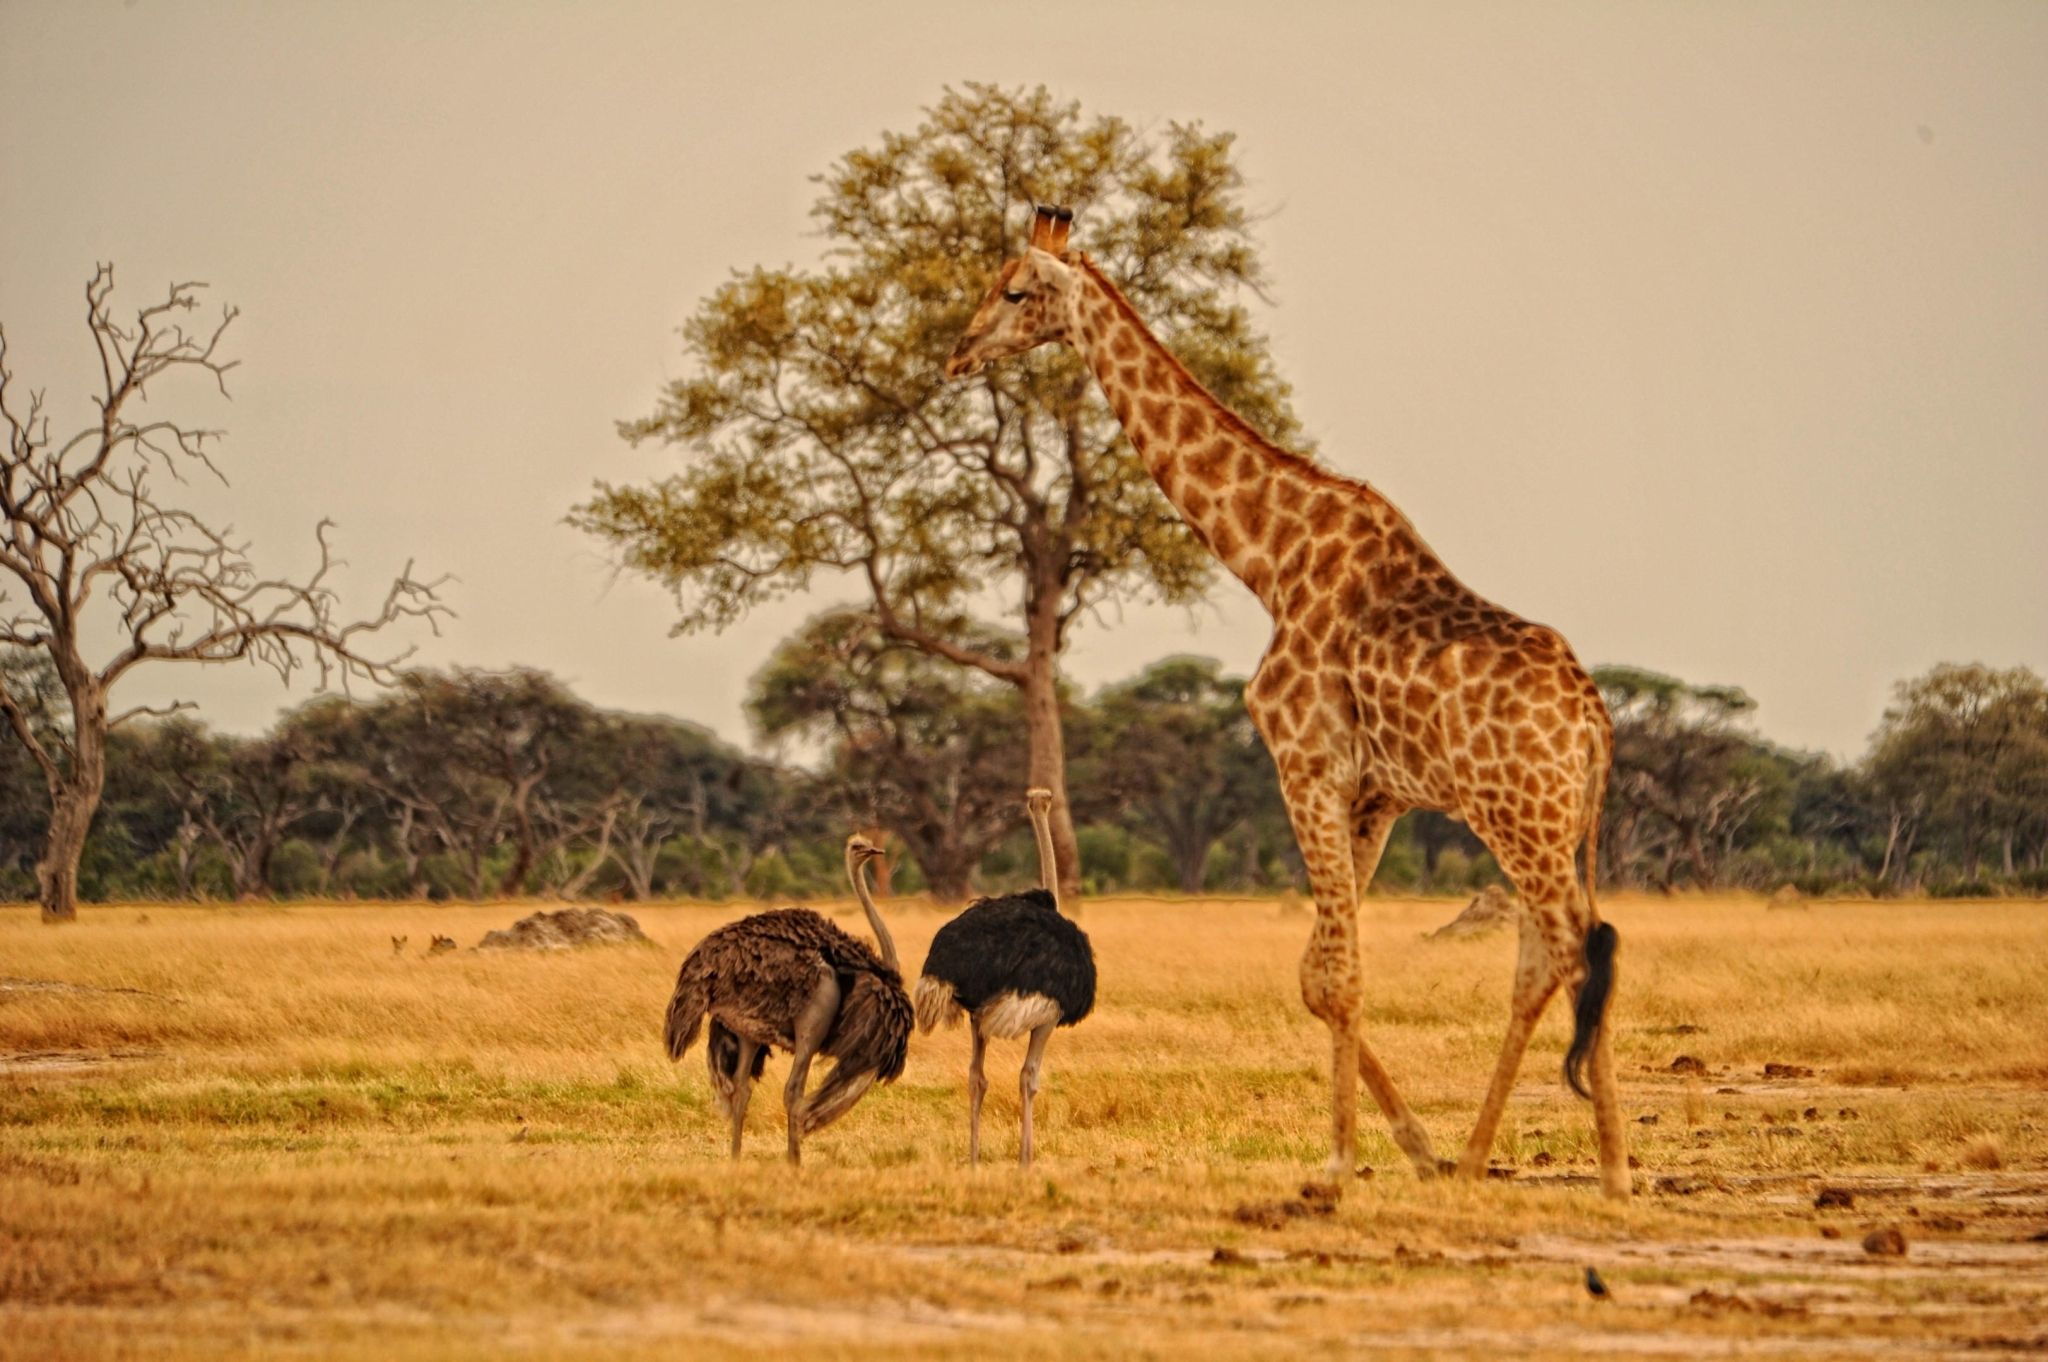 African safari scene with diverse wildlife in Hwange National Park